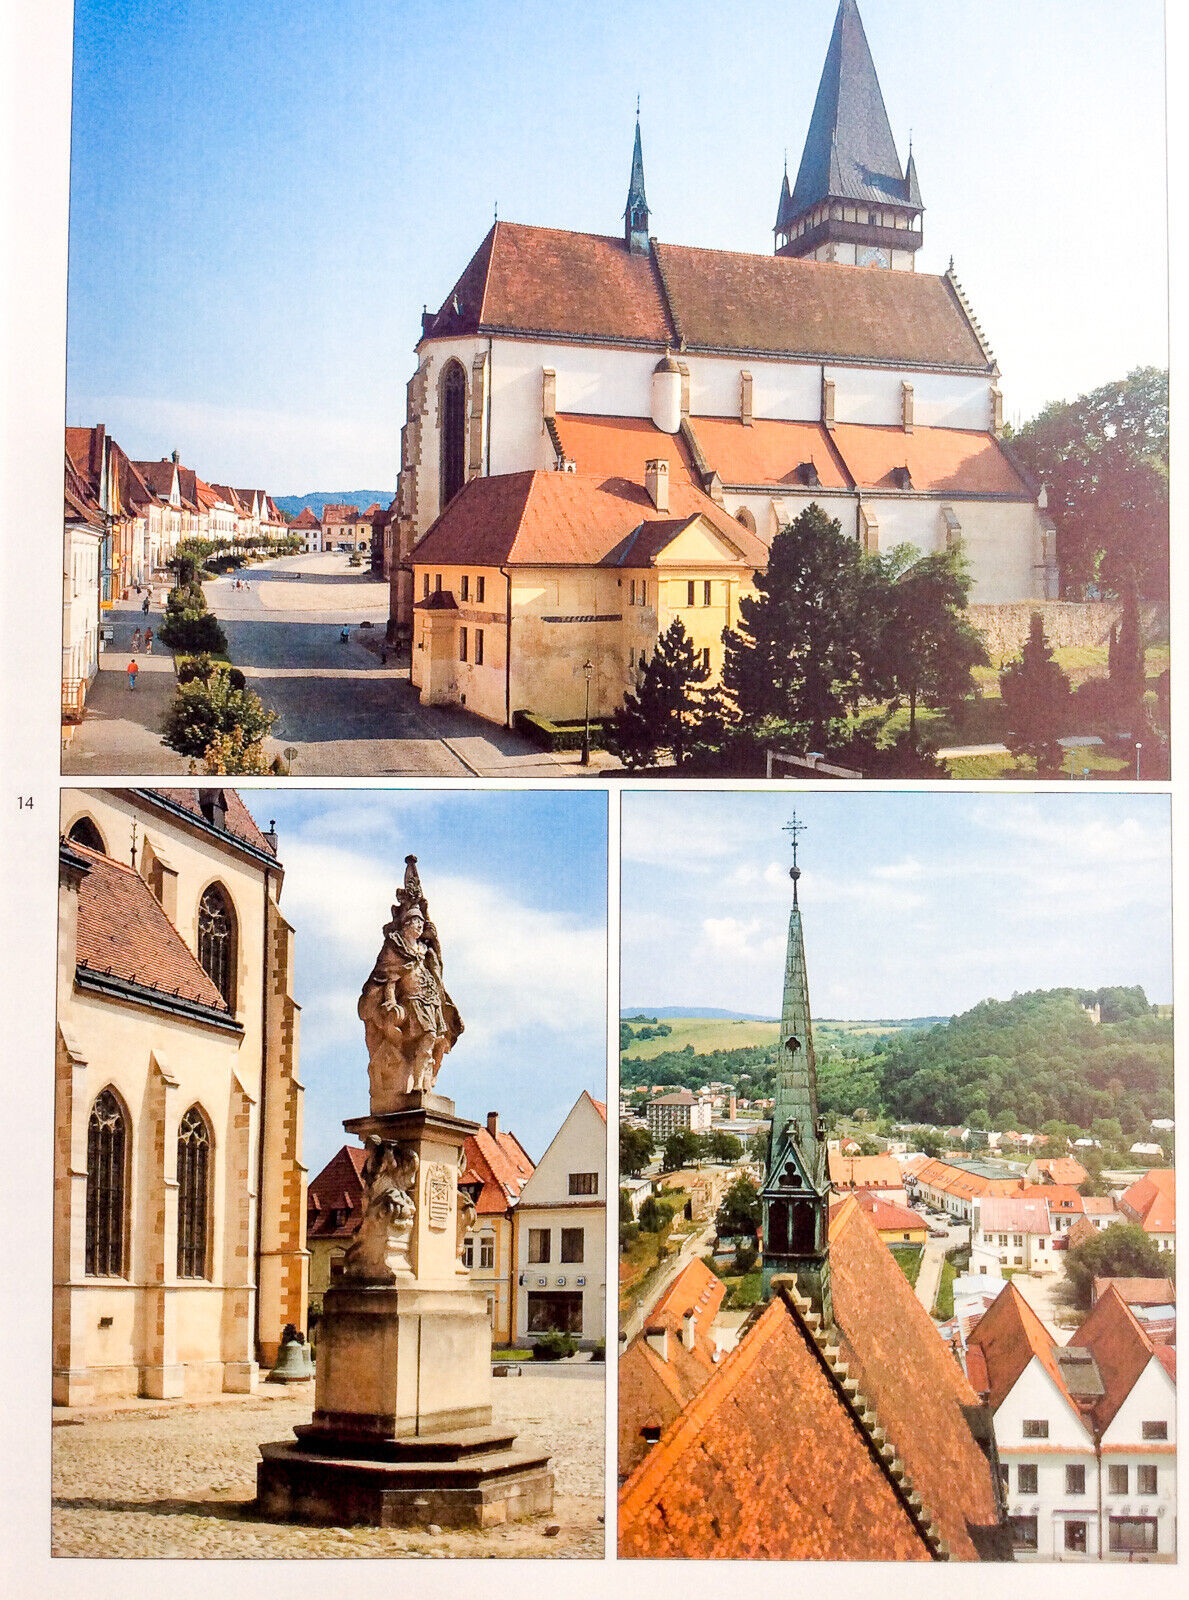 St. Egidius' Church in Bardejov Slovakia Hardcover Book in English & Slovak Rare